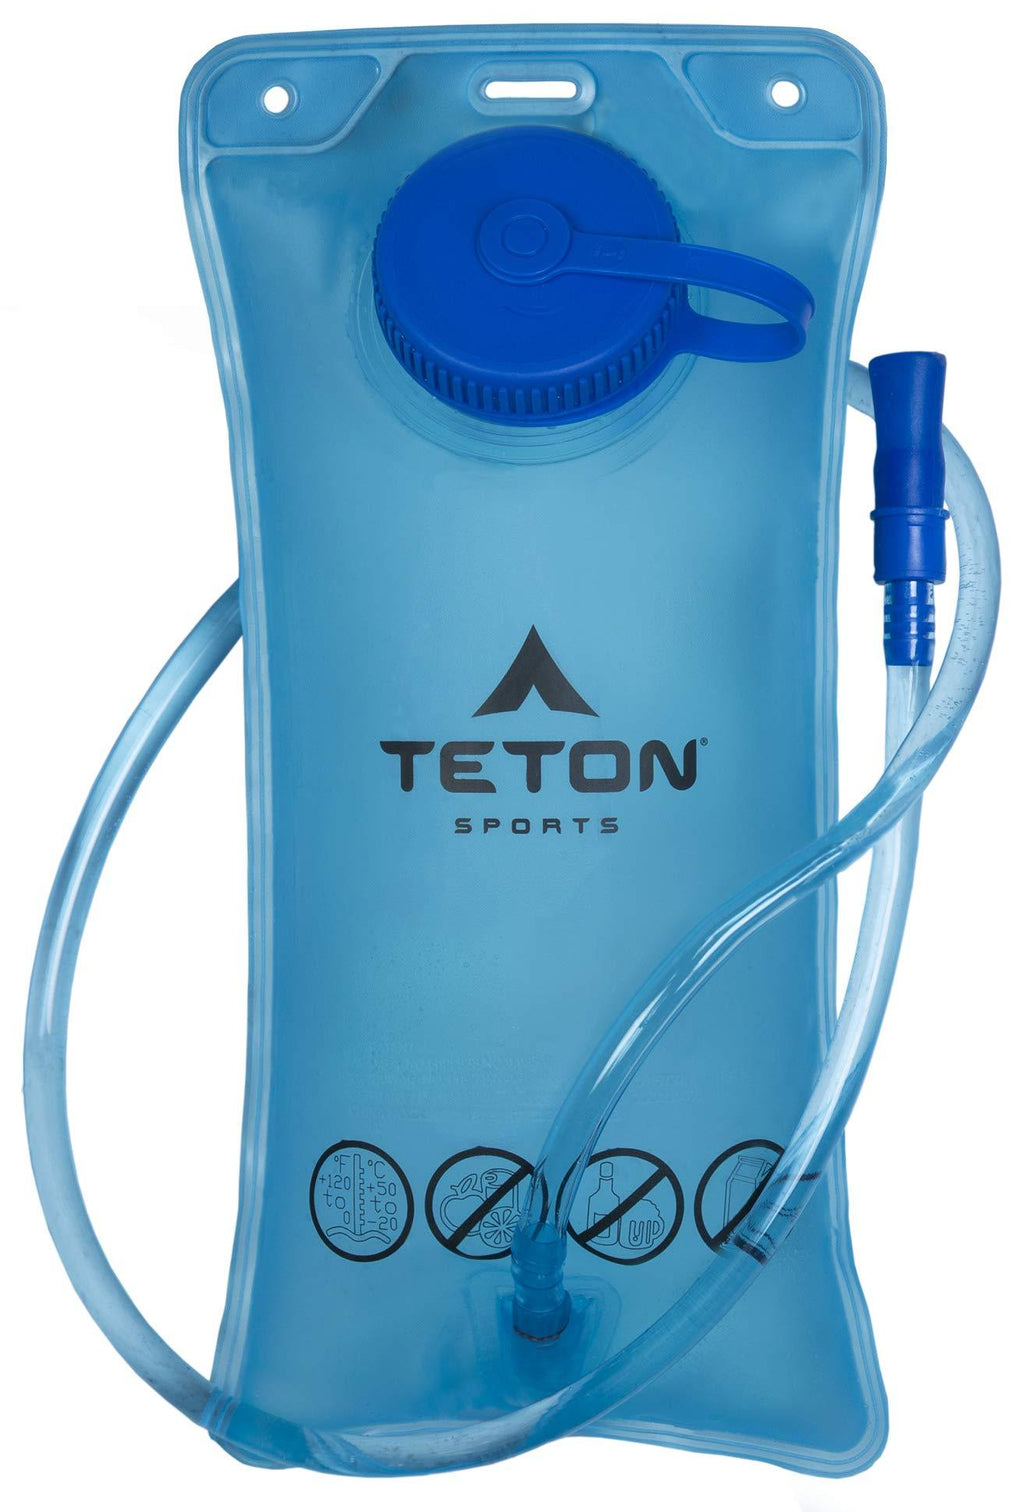 [AUSTRALIA] - TETON Sports Hydration Bladder; BPA Free Water Reservoir; Easy to Refill and Clean 2l Hydration Bladder 